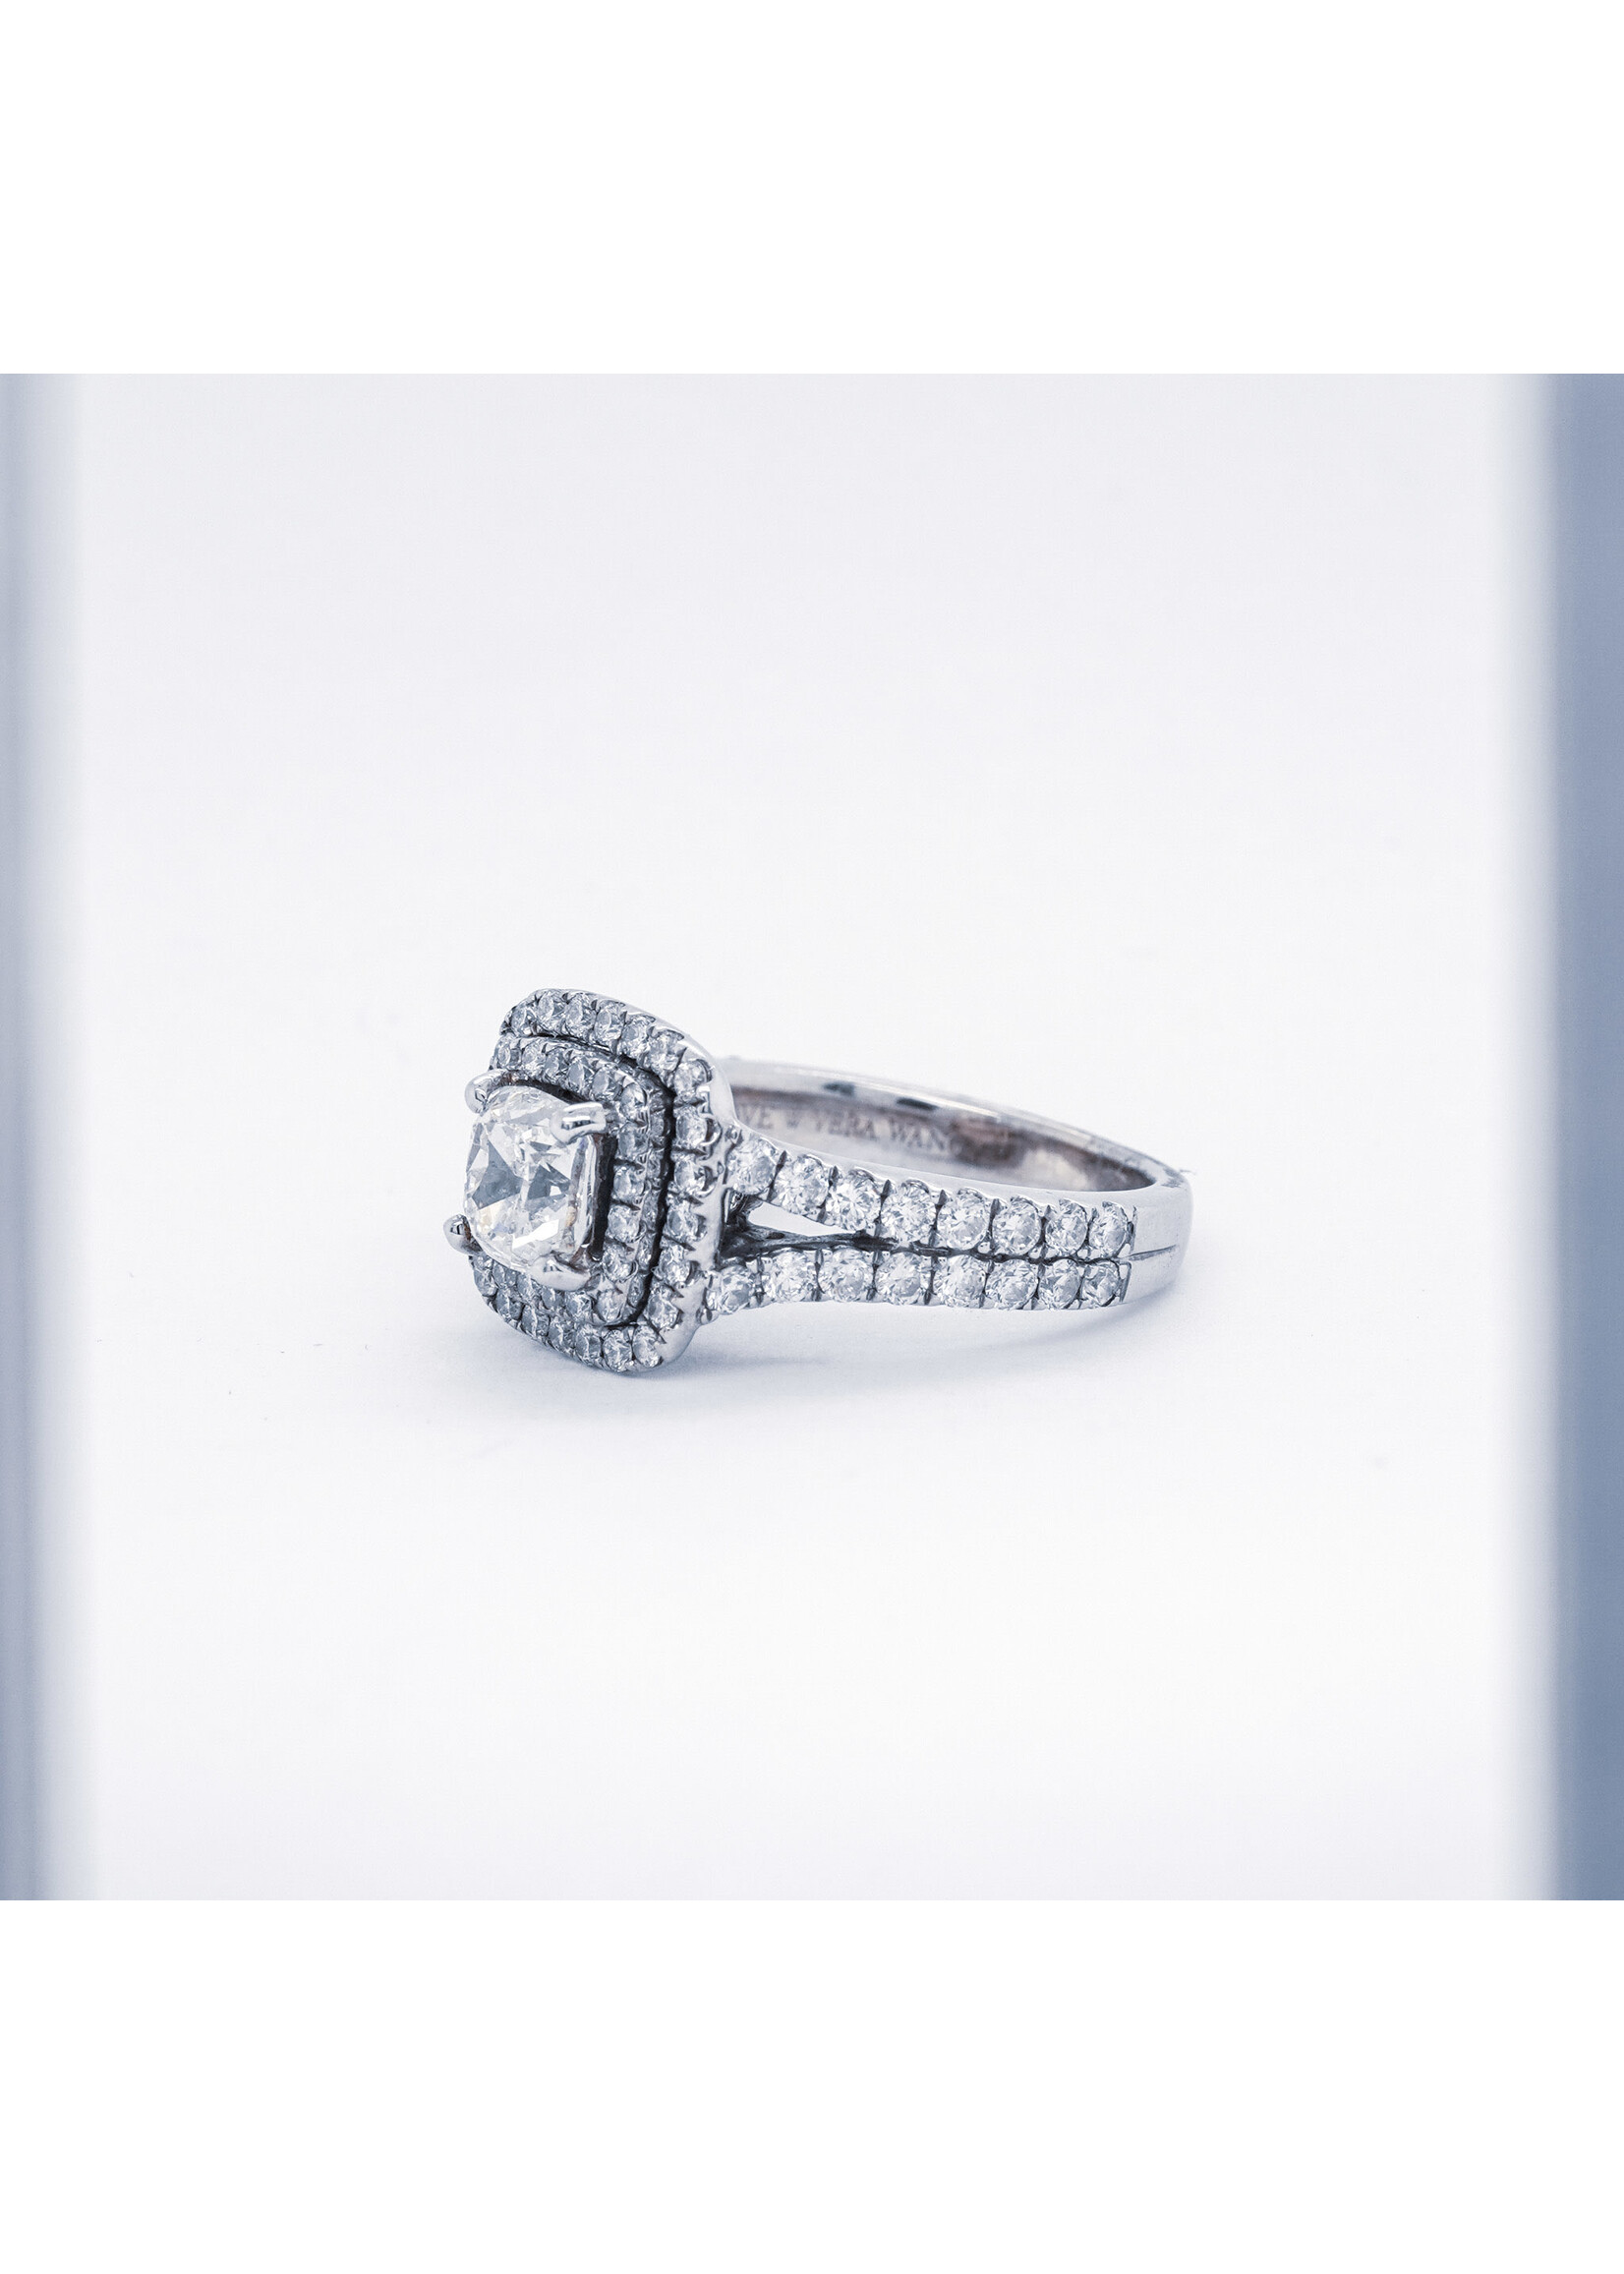 14KW 6.3g 2.55TW (1.05ctr) I/SI1 Cushion Diamond Double Halo Vera Wang Engagement Ring (size 5)